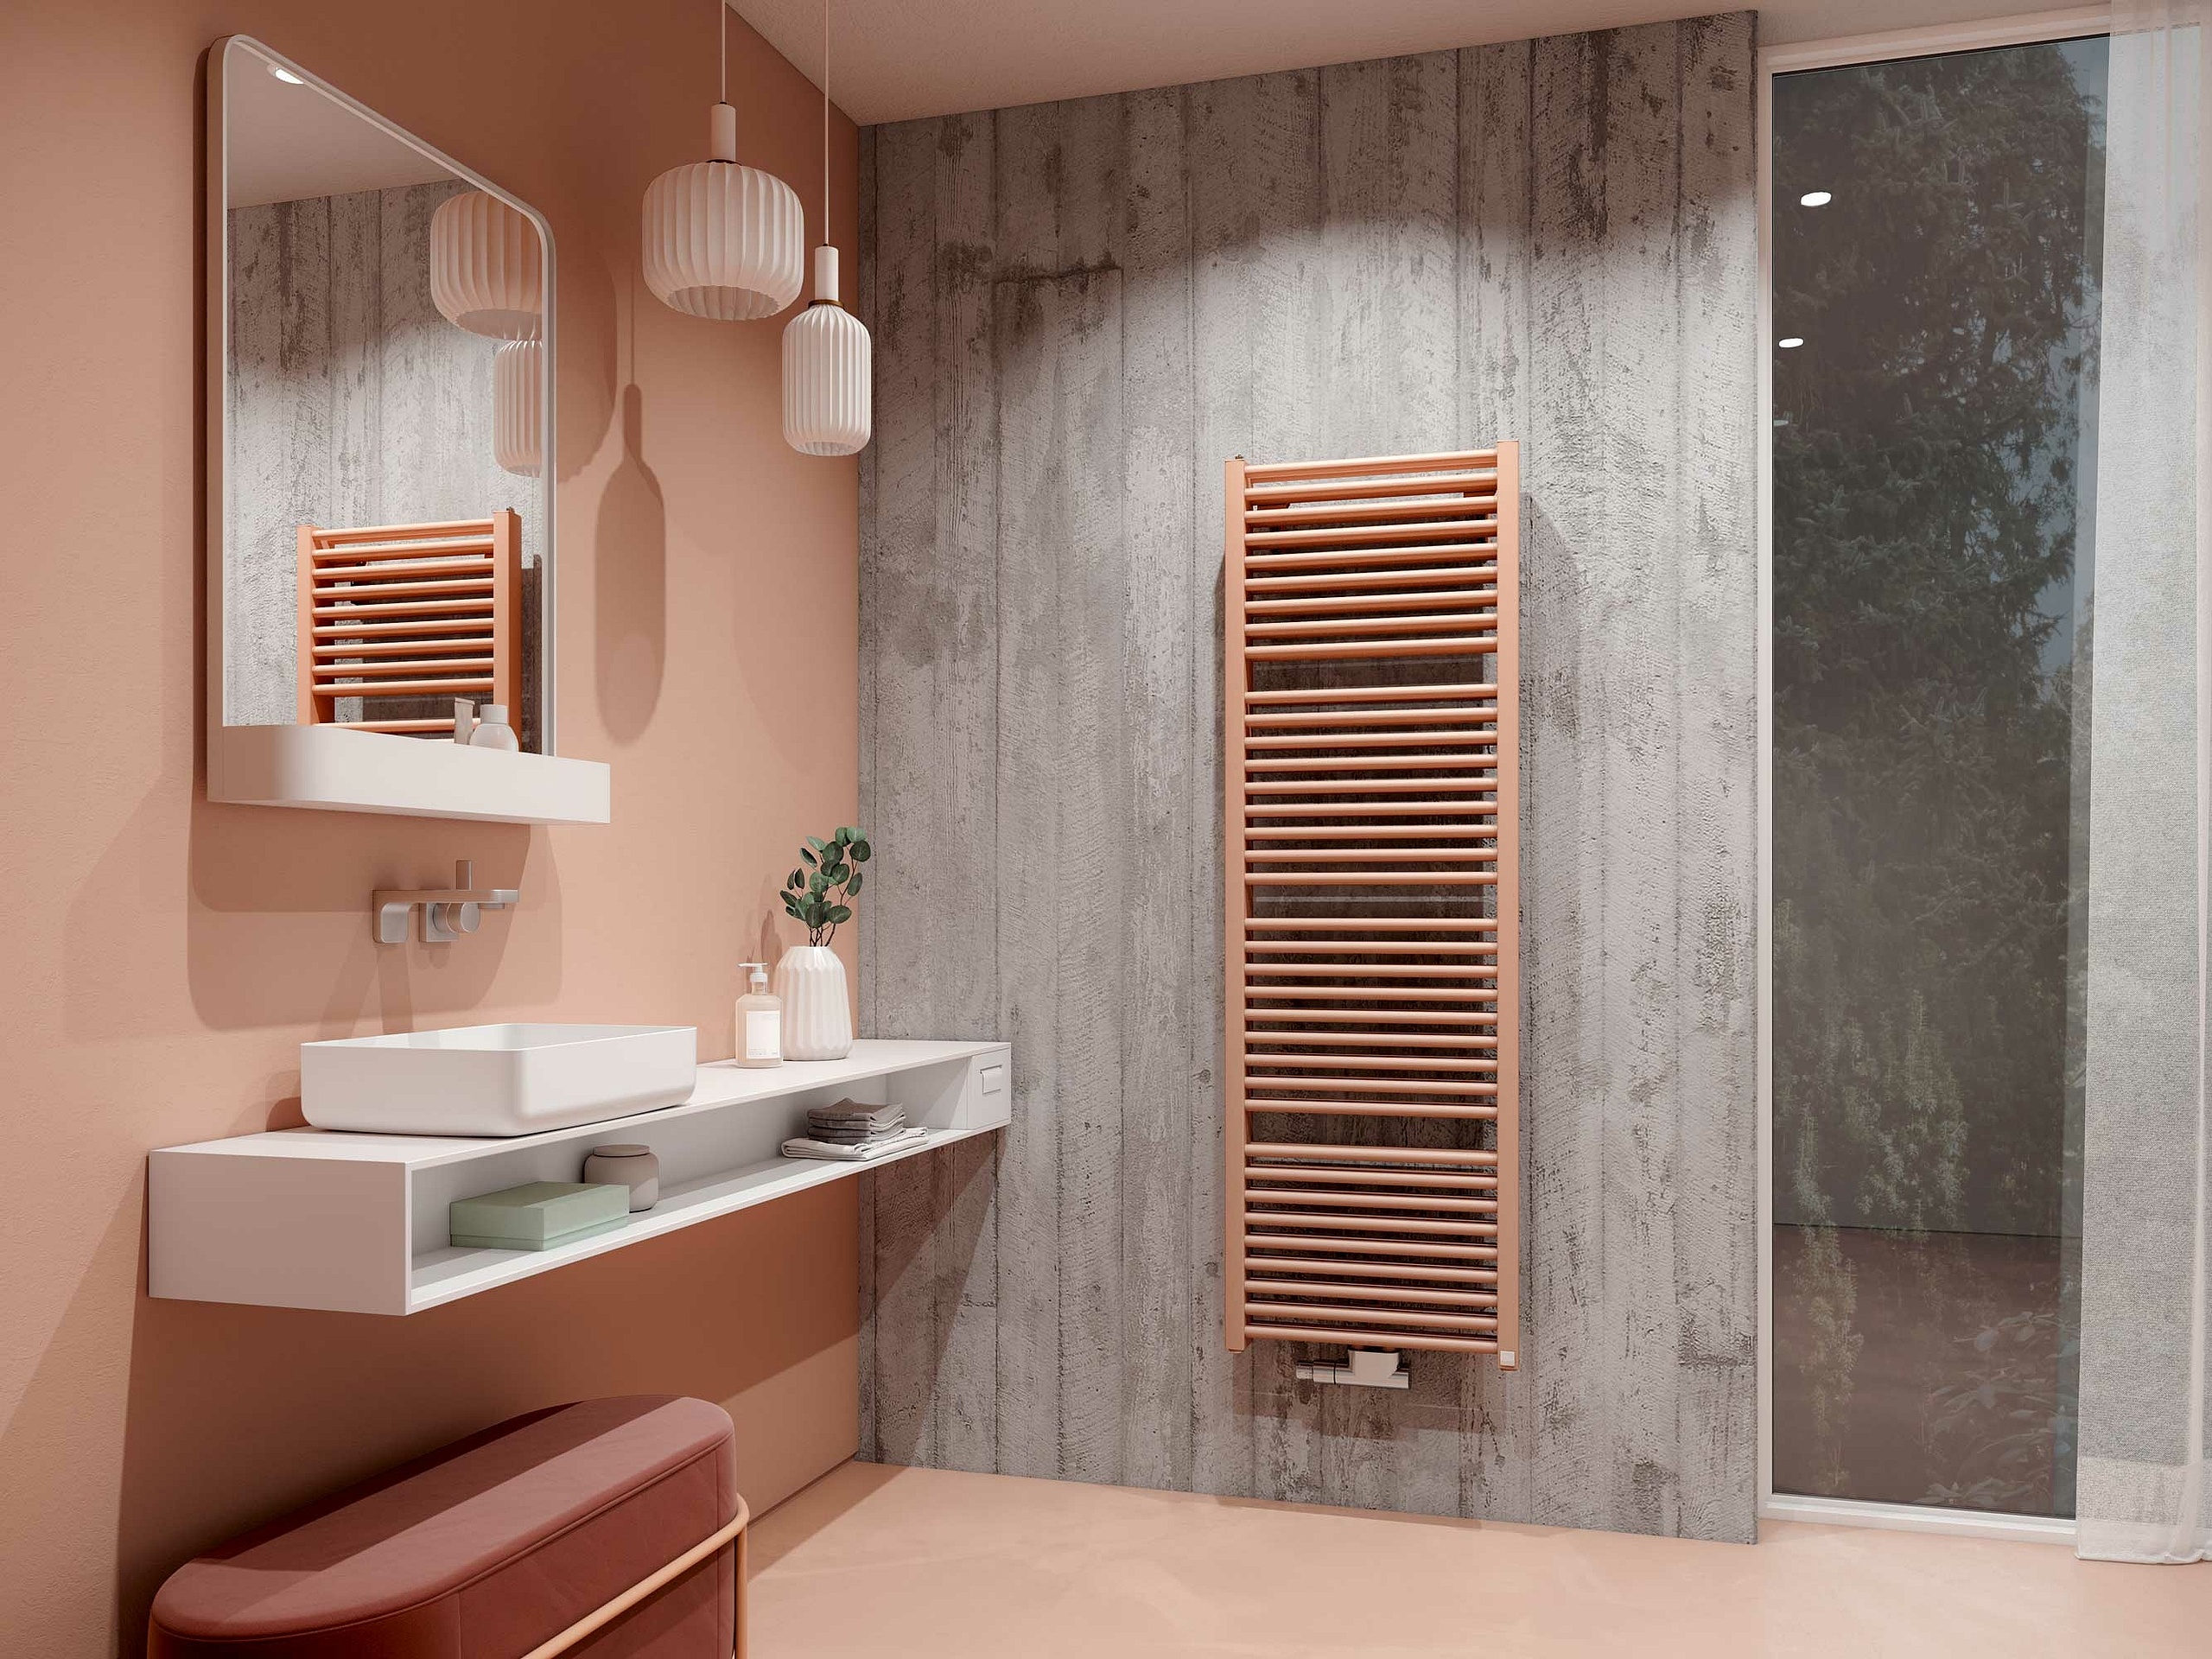 Kermi Duett design and bathroom radiators – classic bathroom heating design with double the power.